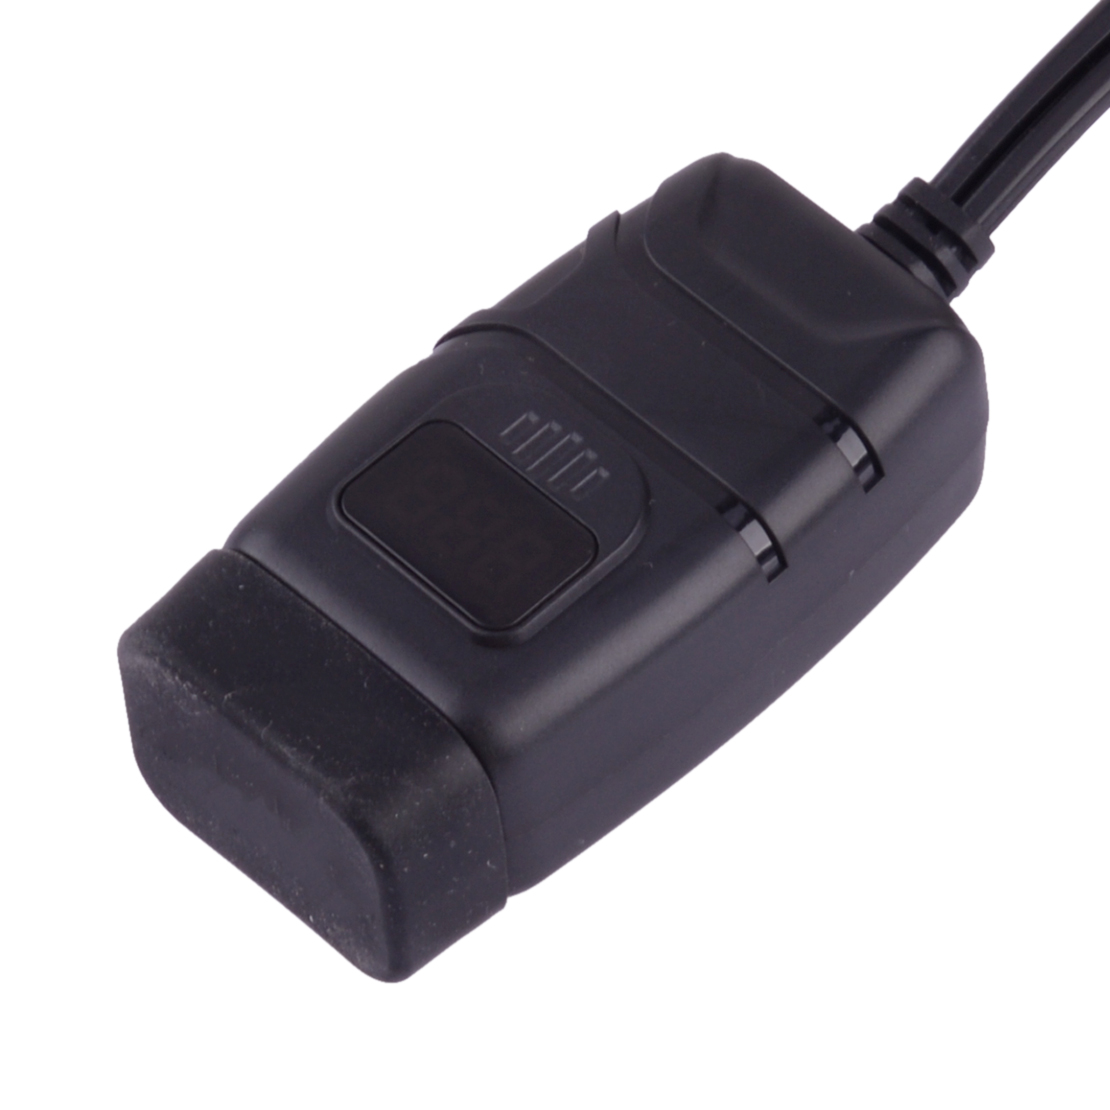 QC 3.0 12V Dual Ports USB Car Motorcycle Phone GPS Charger Digital LED Voltmeter